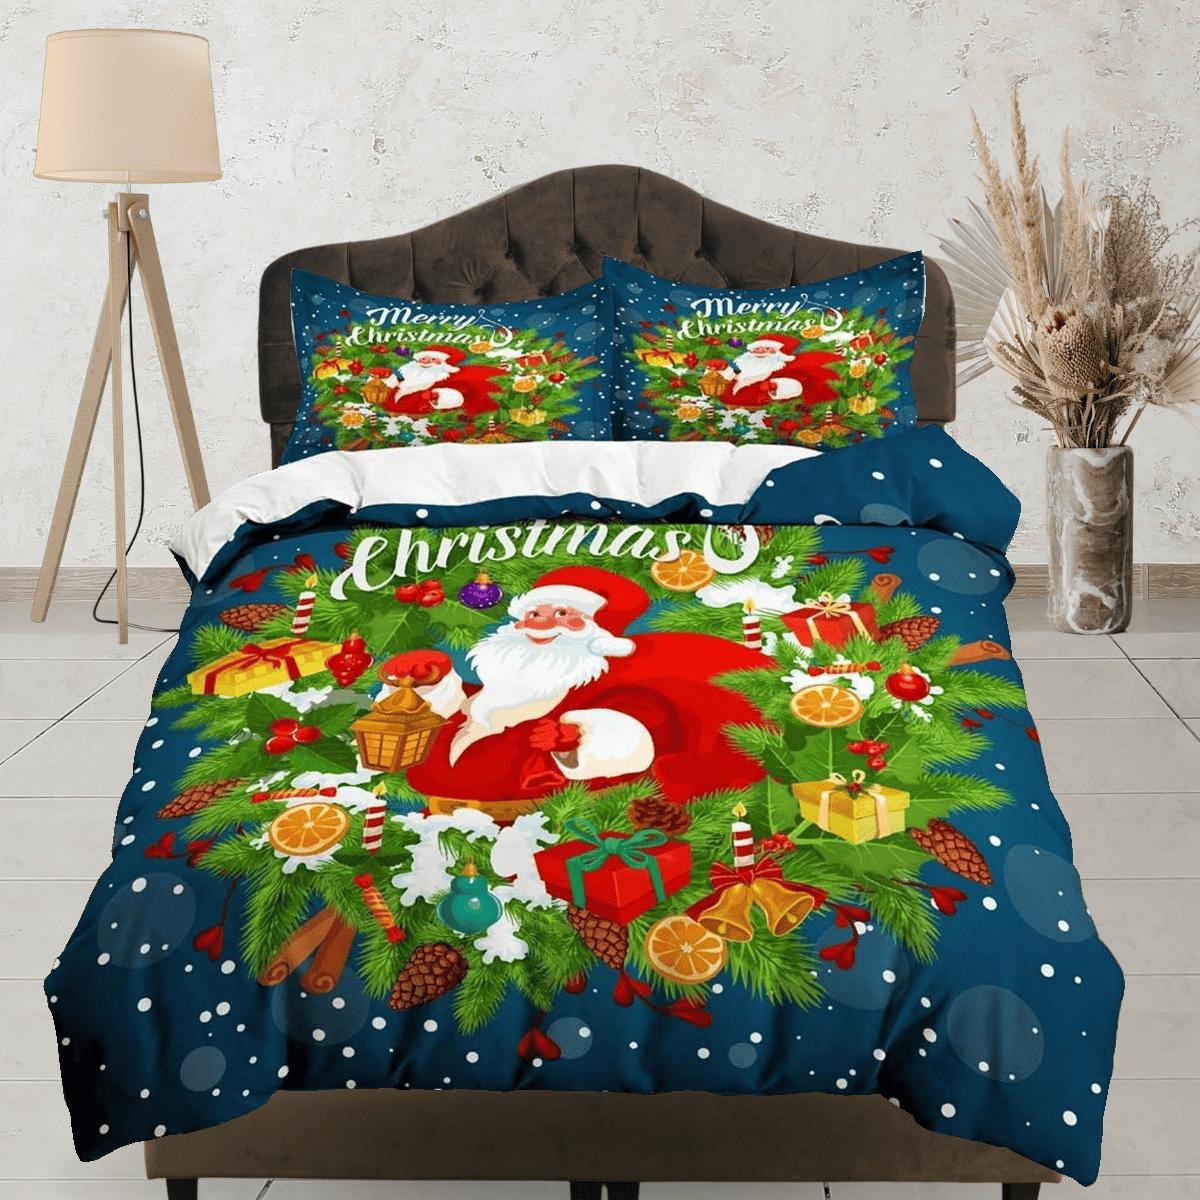 daintyduvet Santa Claus Merry Christmas bedding & pillowcase holiday gift blue duvet cover king queen full twin toddler bedding baby Christmas farmhouse